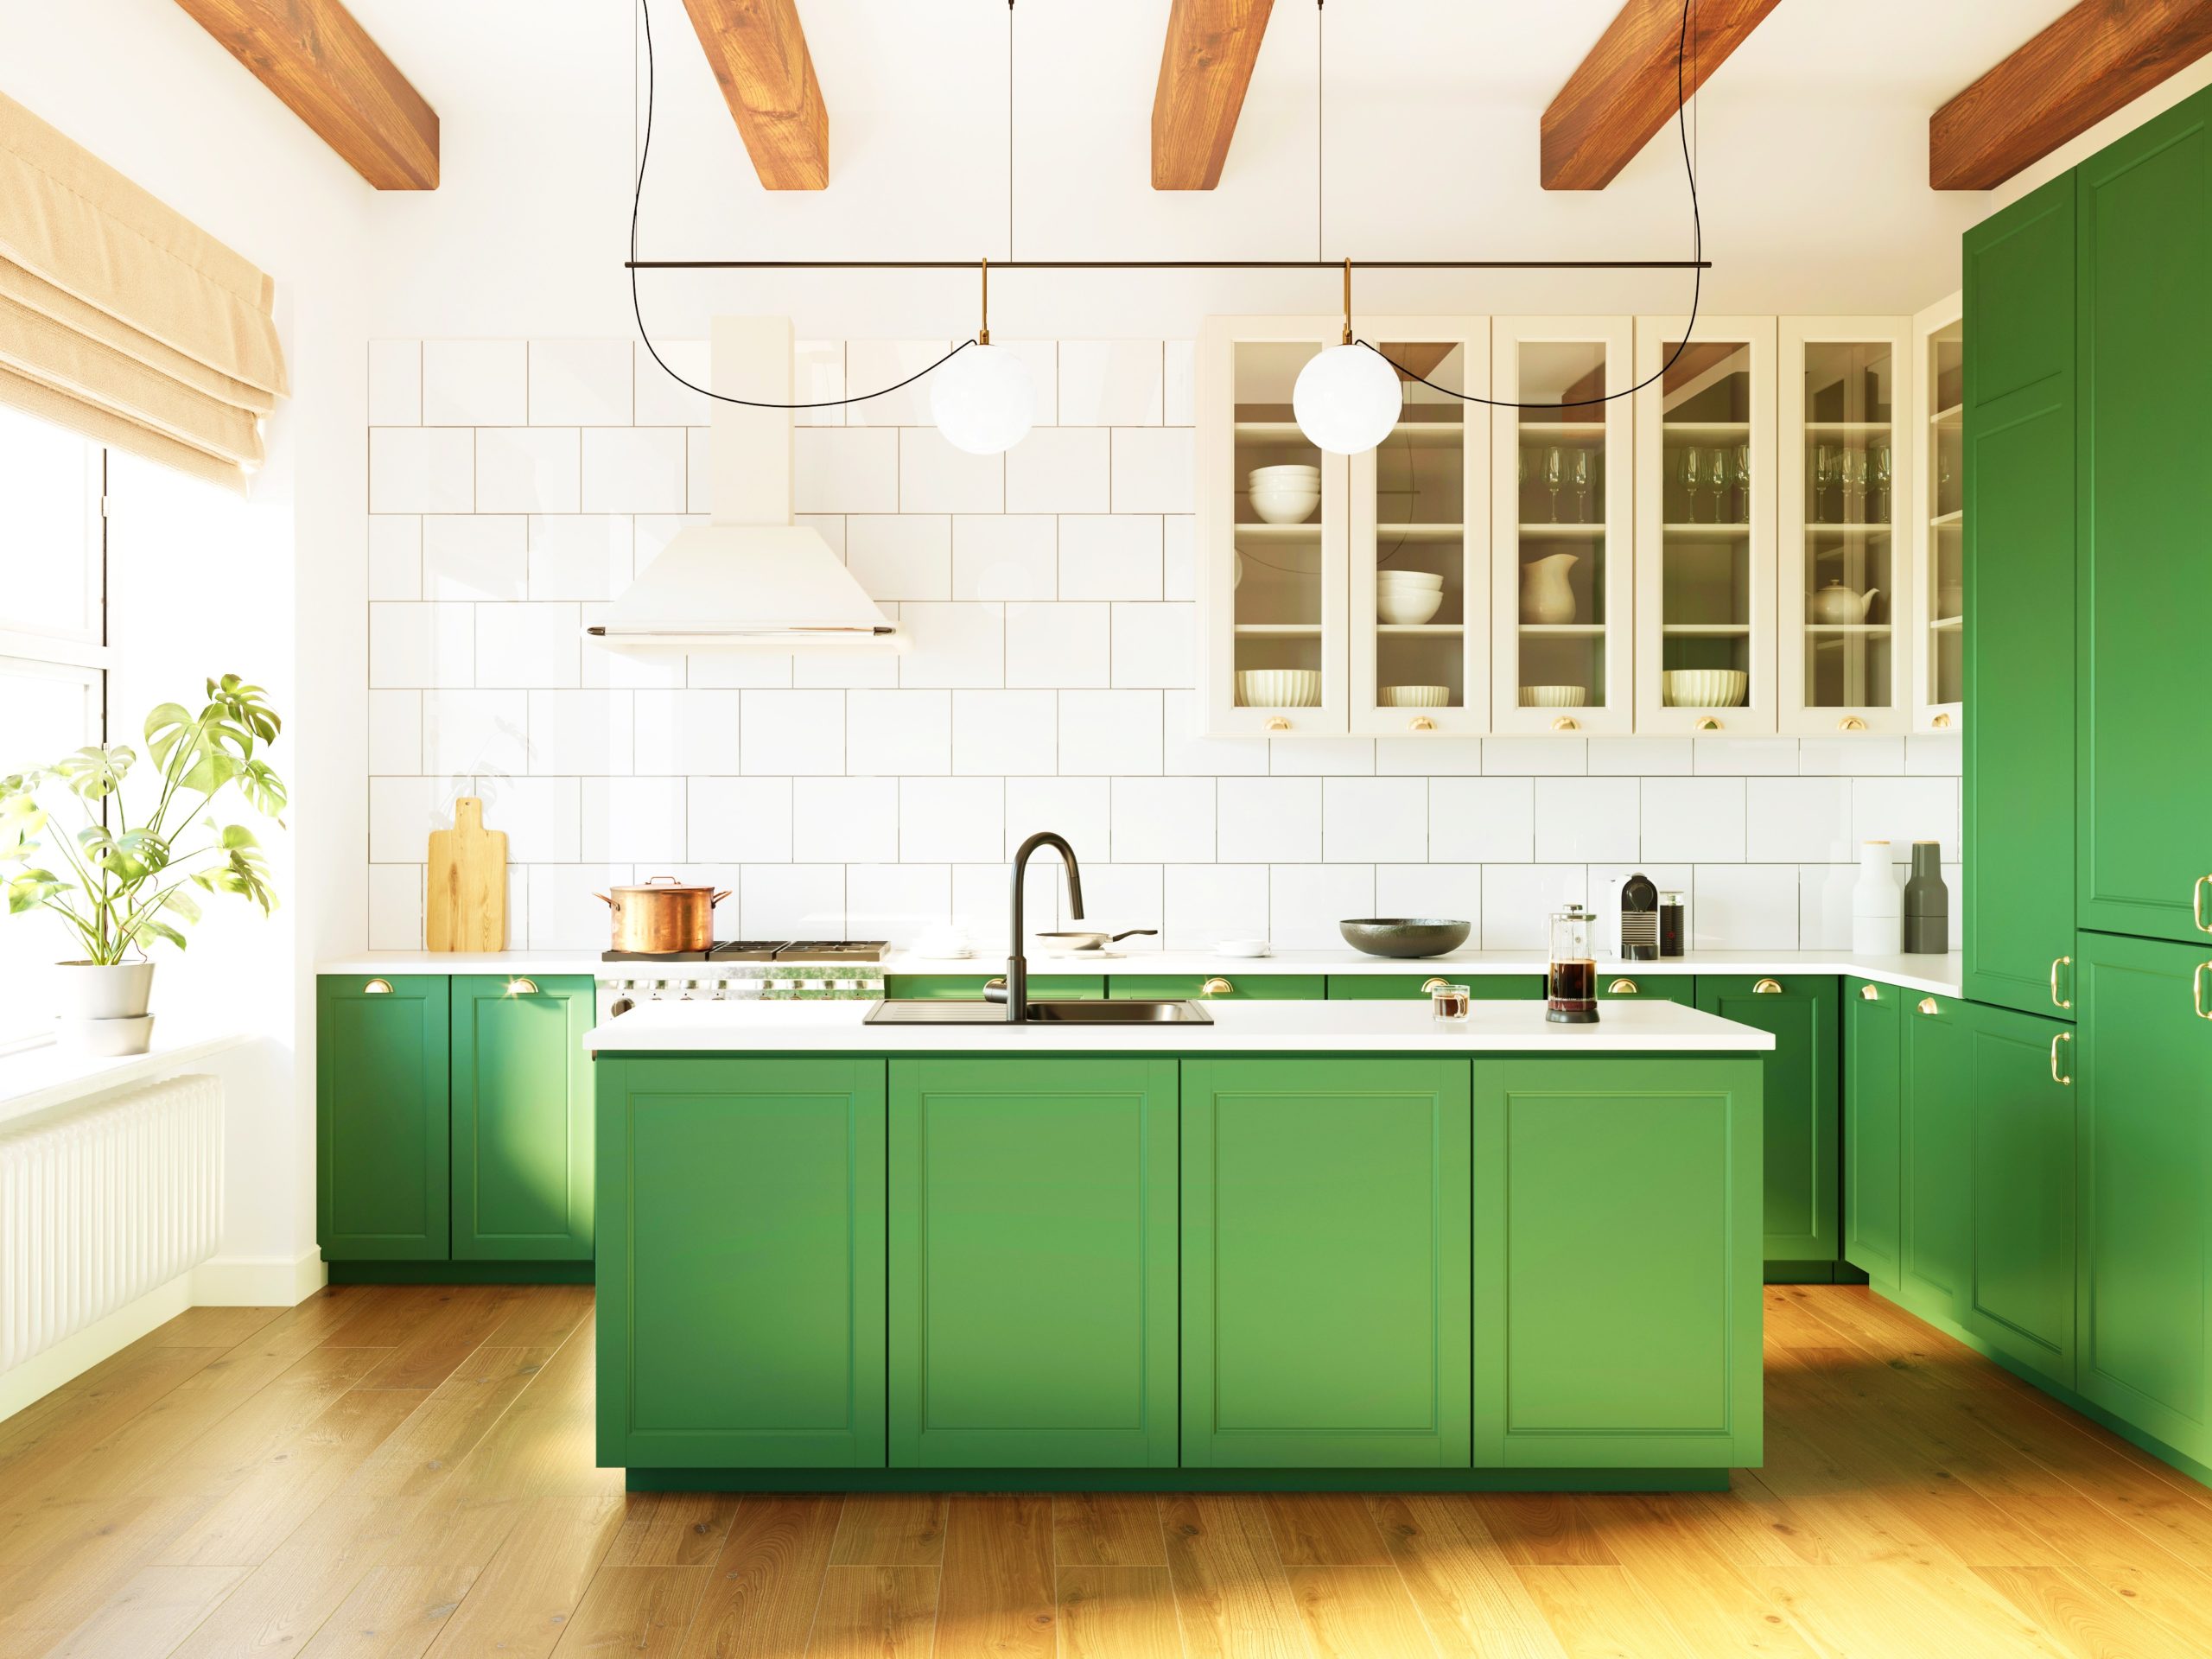 <img src="green.jpg" alt="green kitchen bring colour to home "/> 